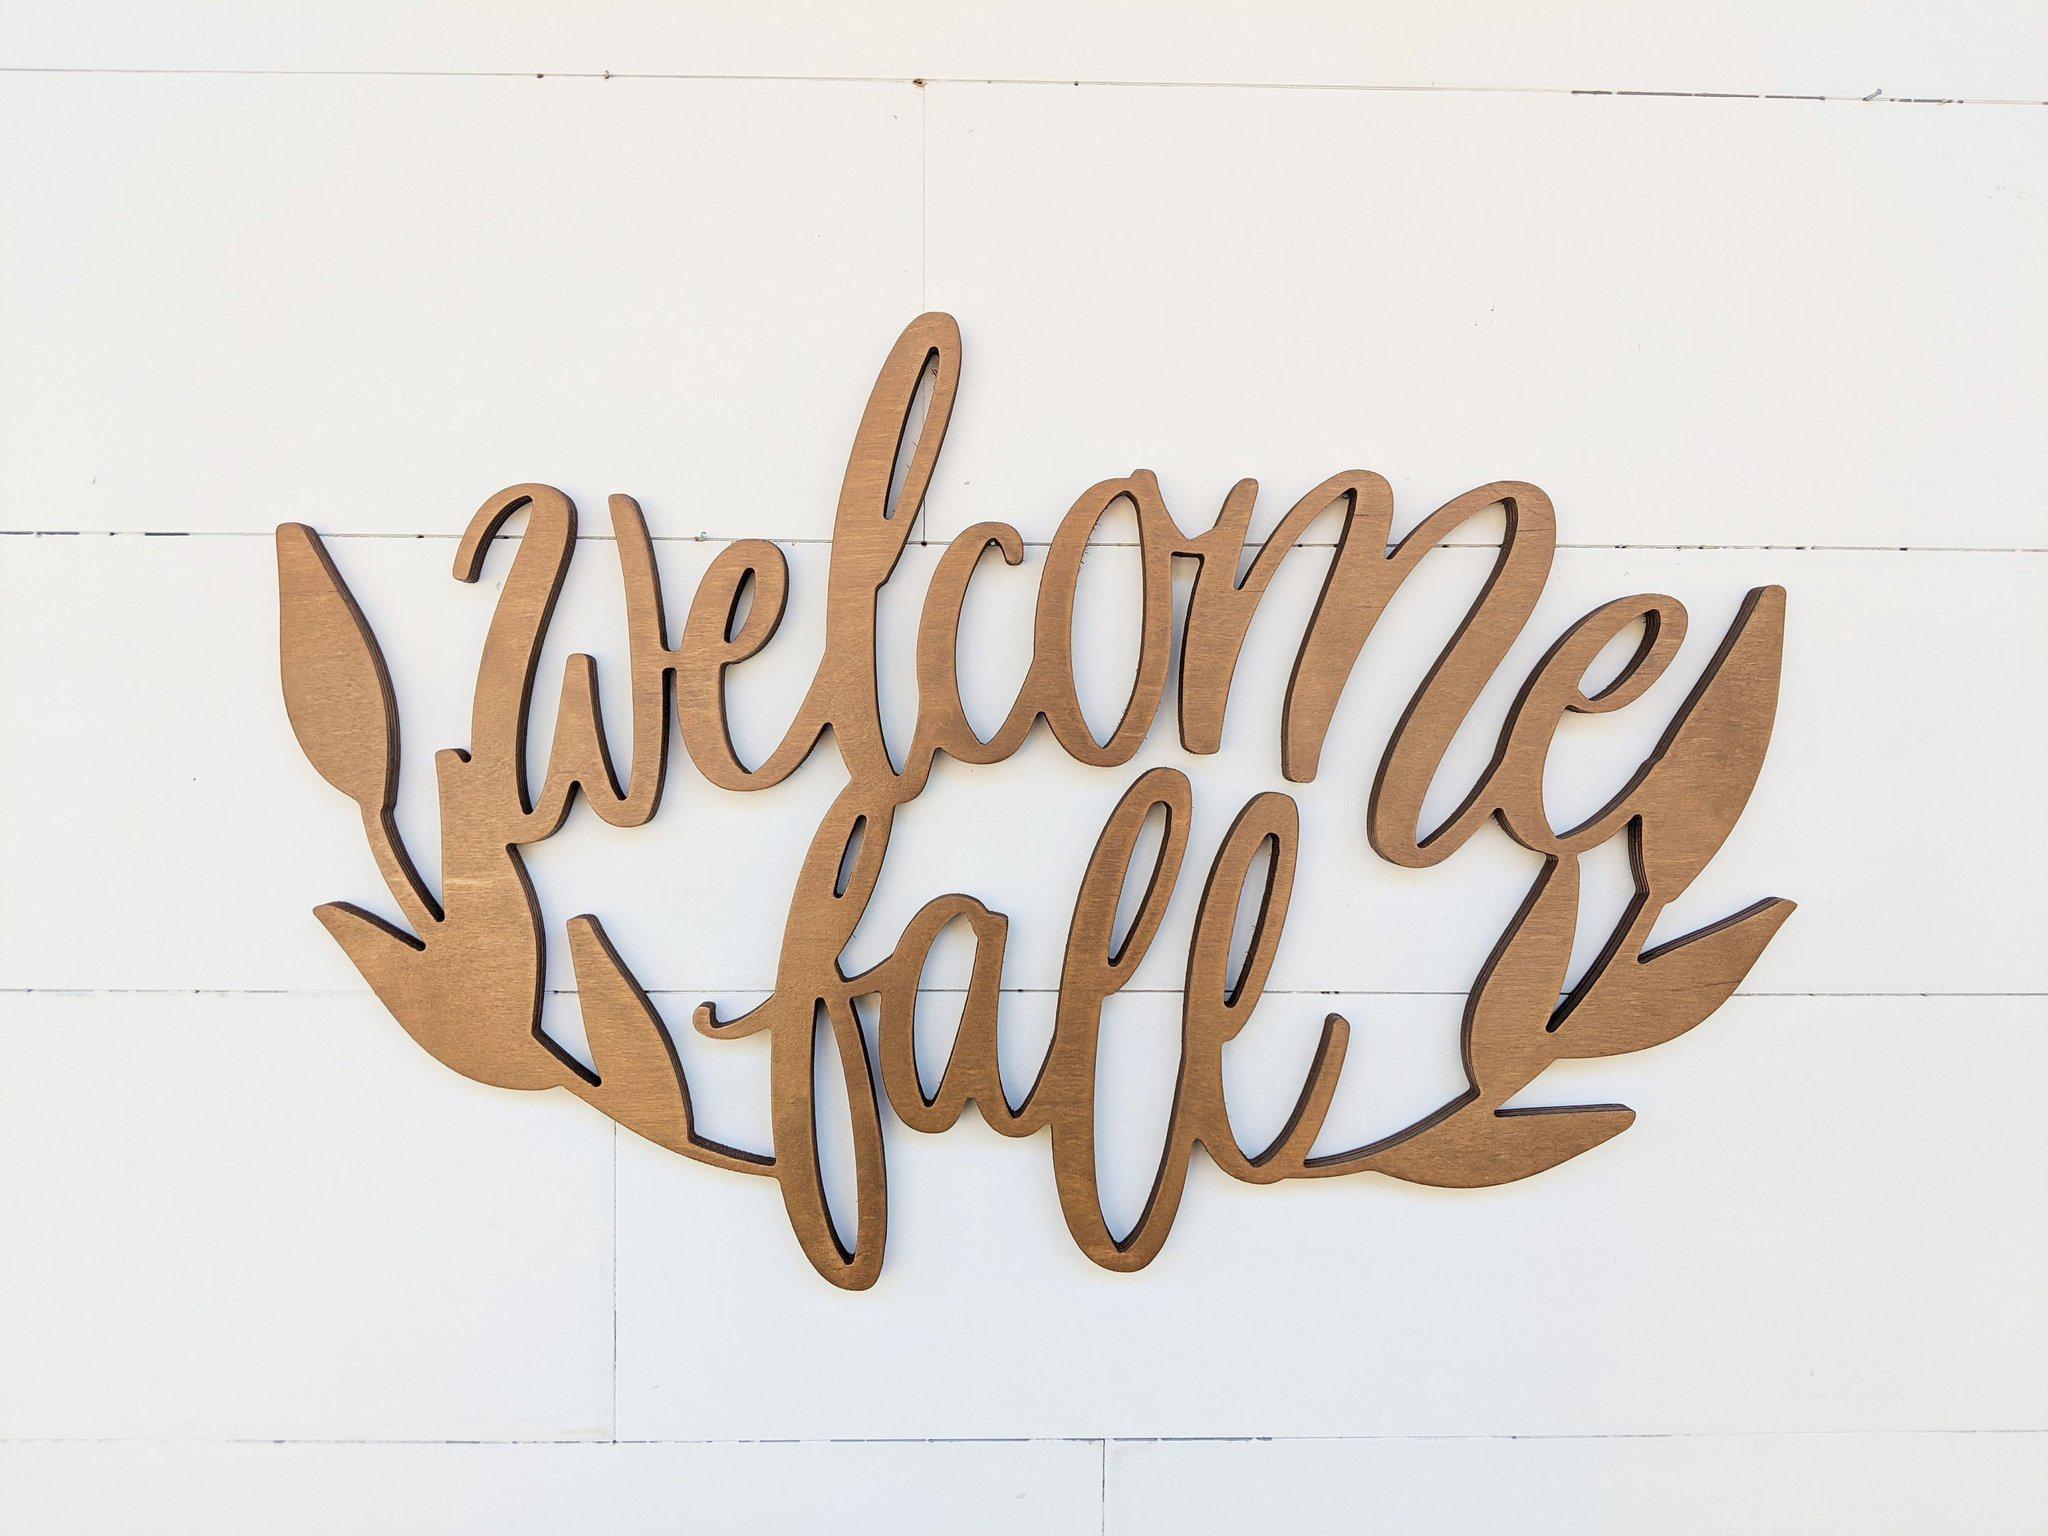 Welcome Fall